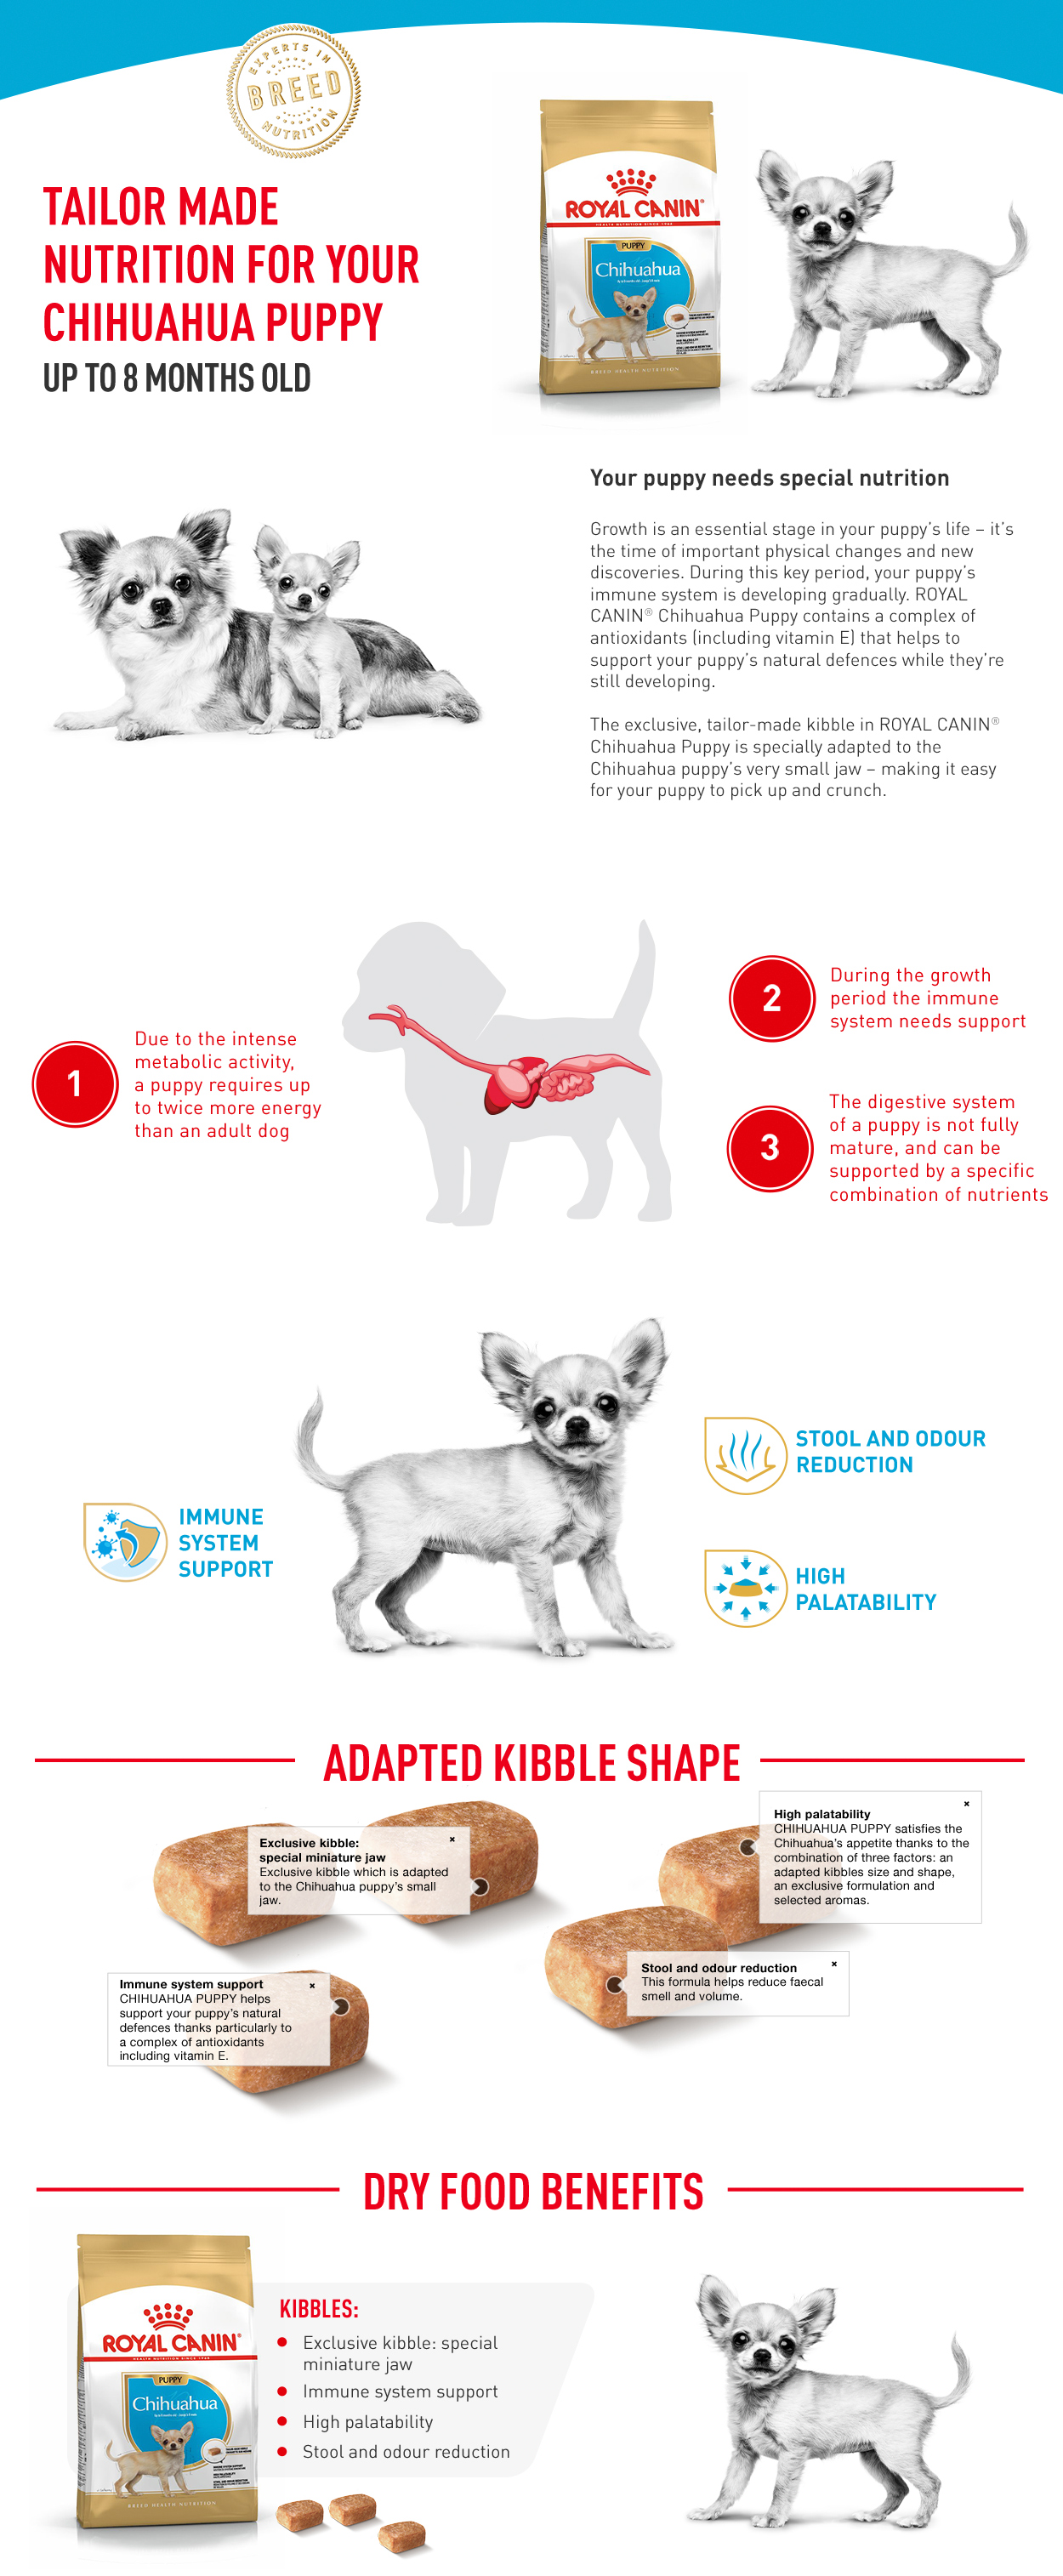 III. Essential Chihuahua Health Care Tips